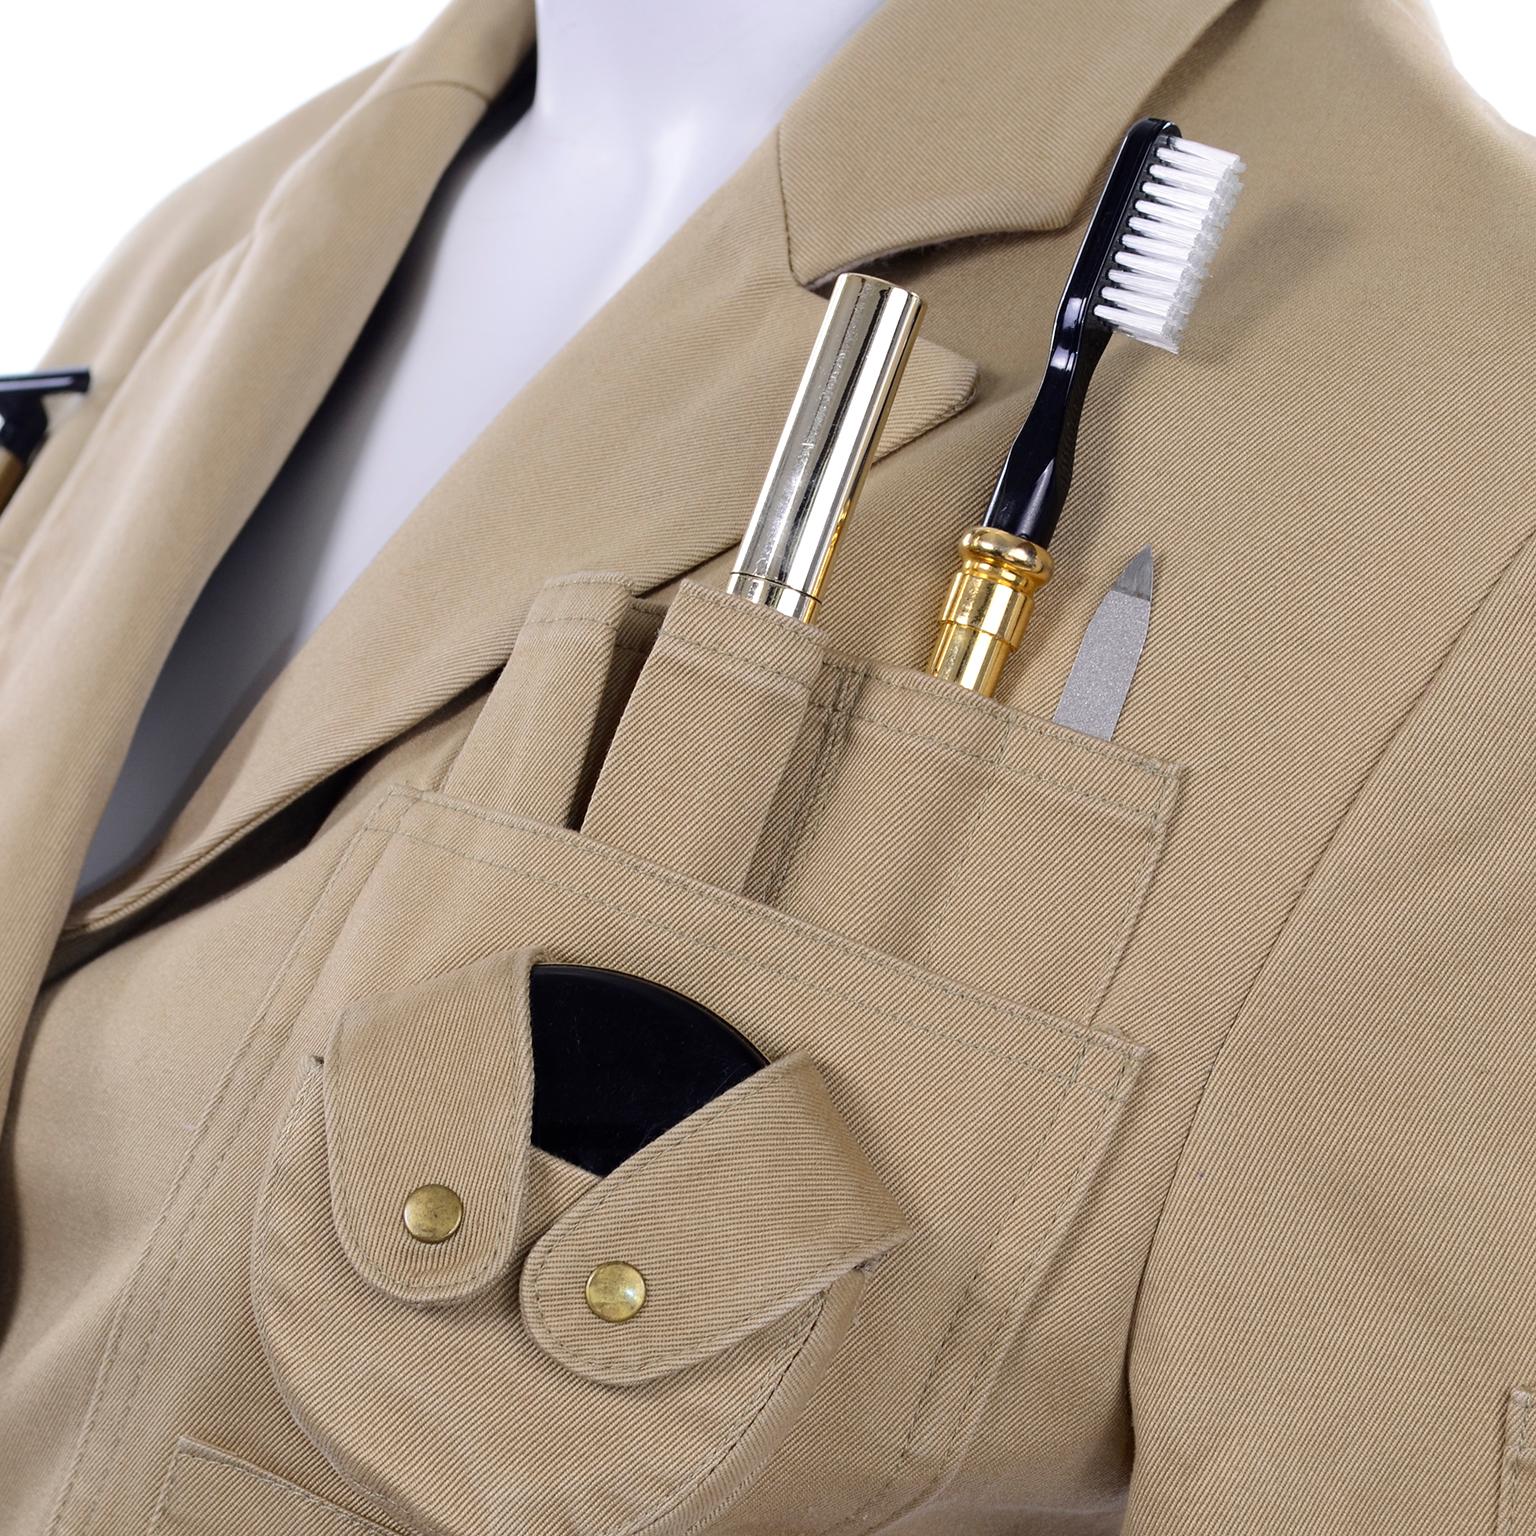 1991 Franco Moschino Couture Survival Jacket in Khaki Cotton Urban Jungle Tools 5